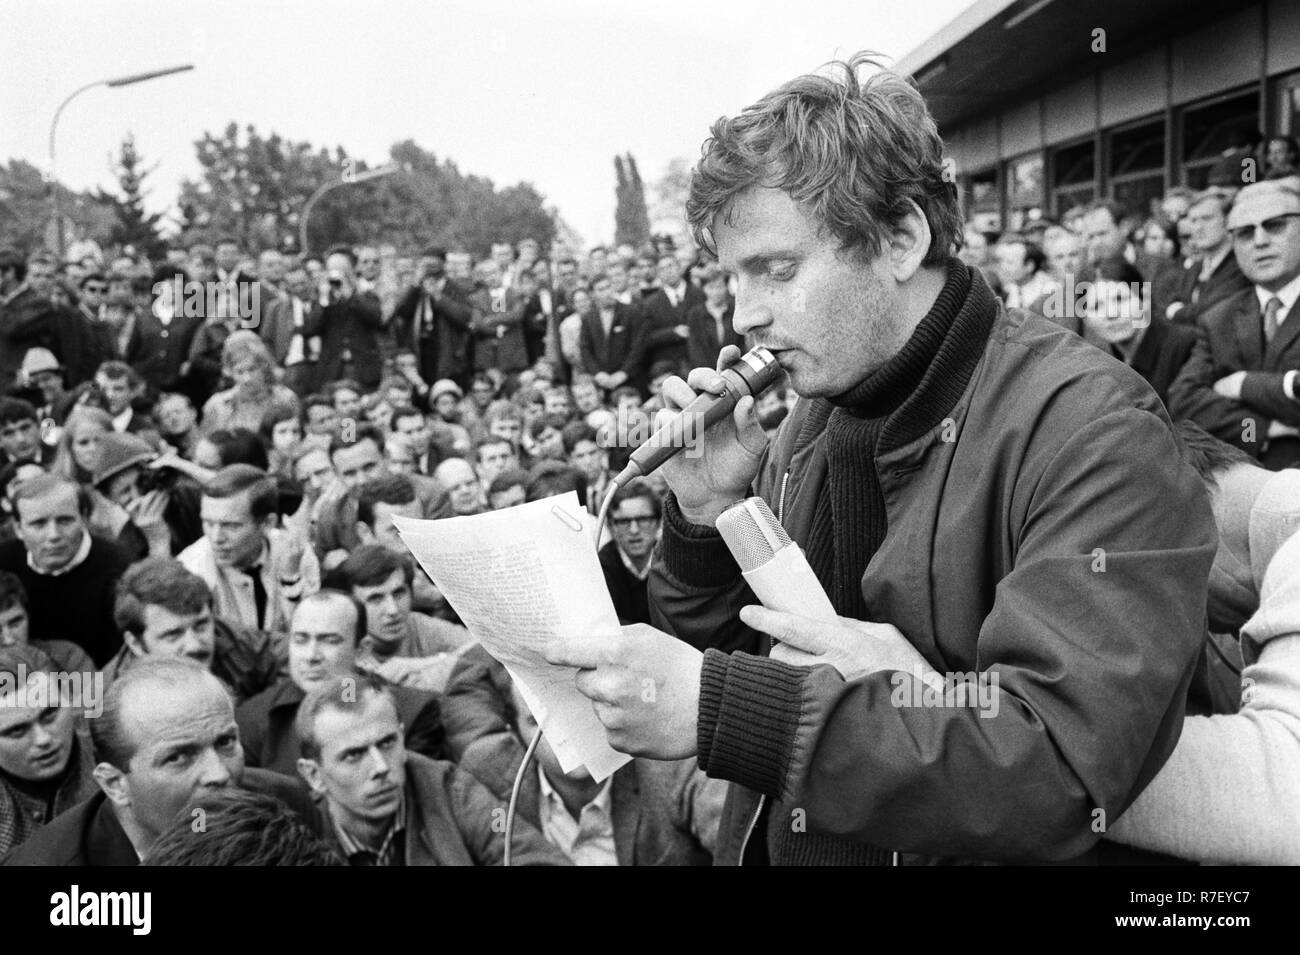 Daniel Cohn-Bendit delivers a statement. Daniel-Cohn Bendit's attempt to enter France across the border 'Goldene Bremm' near Saarbruecken despite a refusal of entry failed on 24 May 1968. | usage worldwide Stock Photo